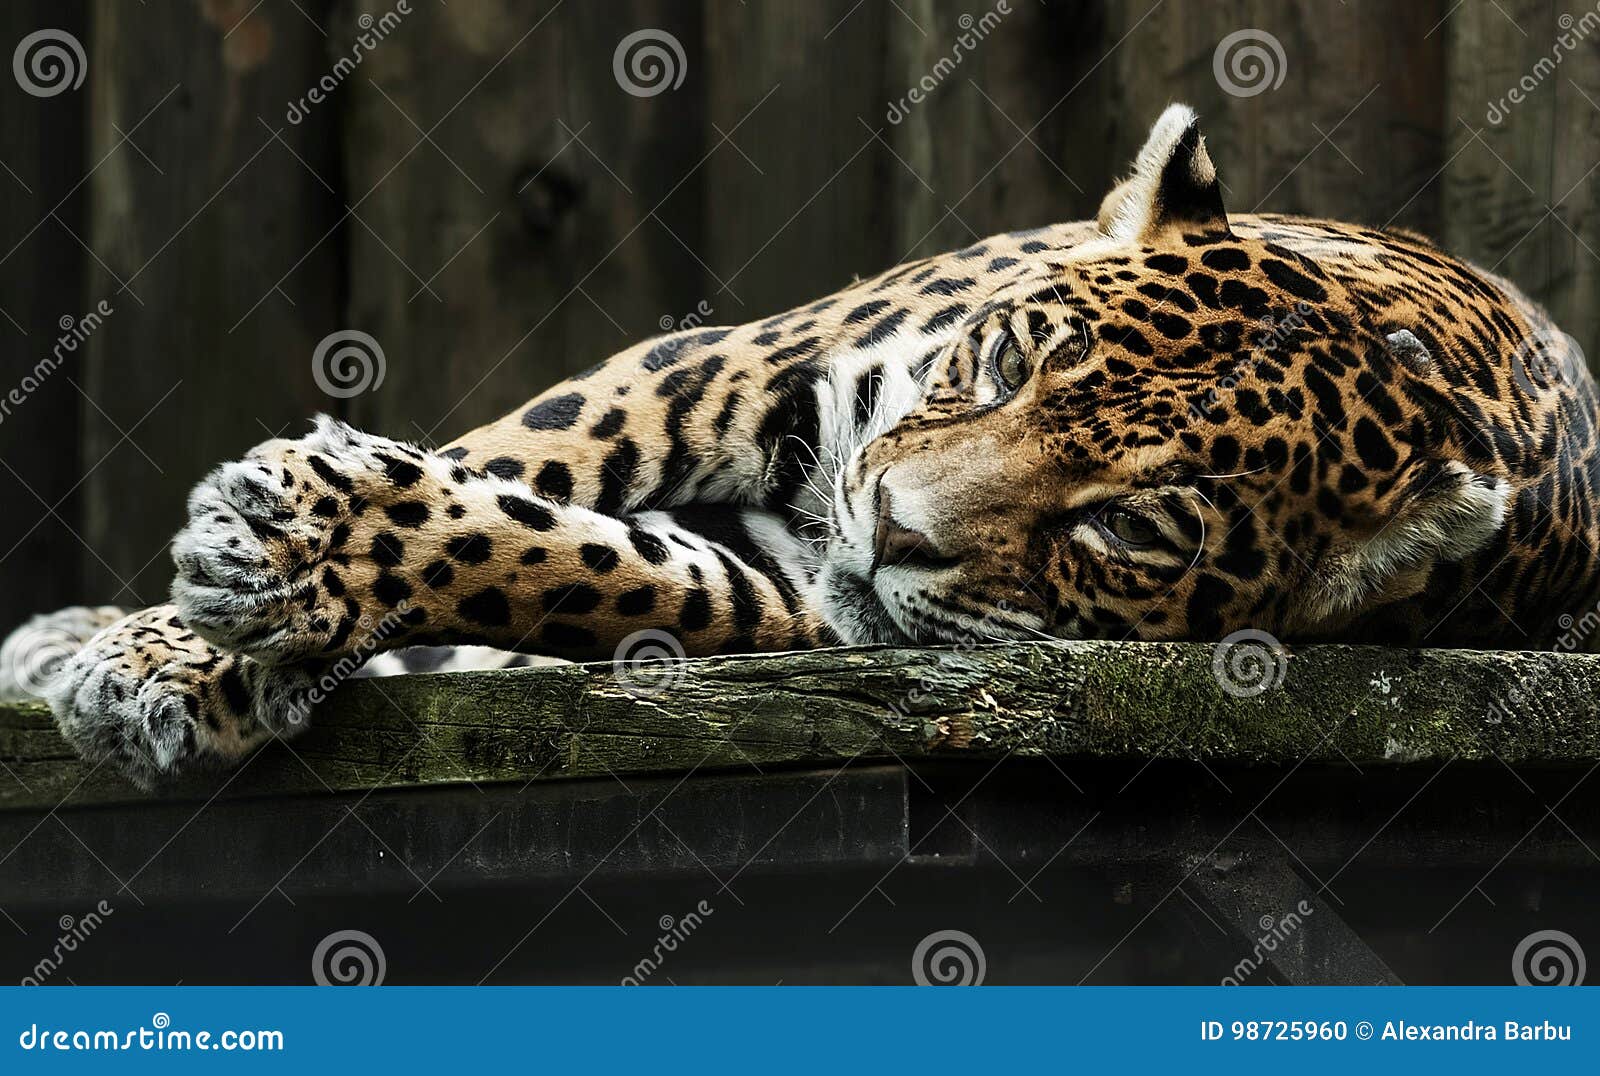 sad leopard in captivity